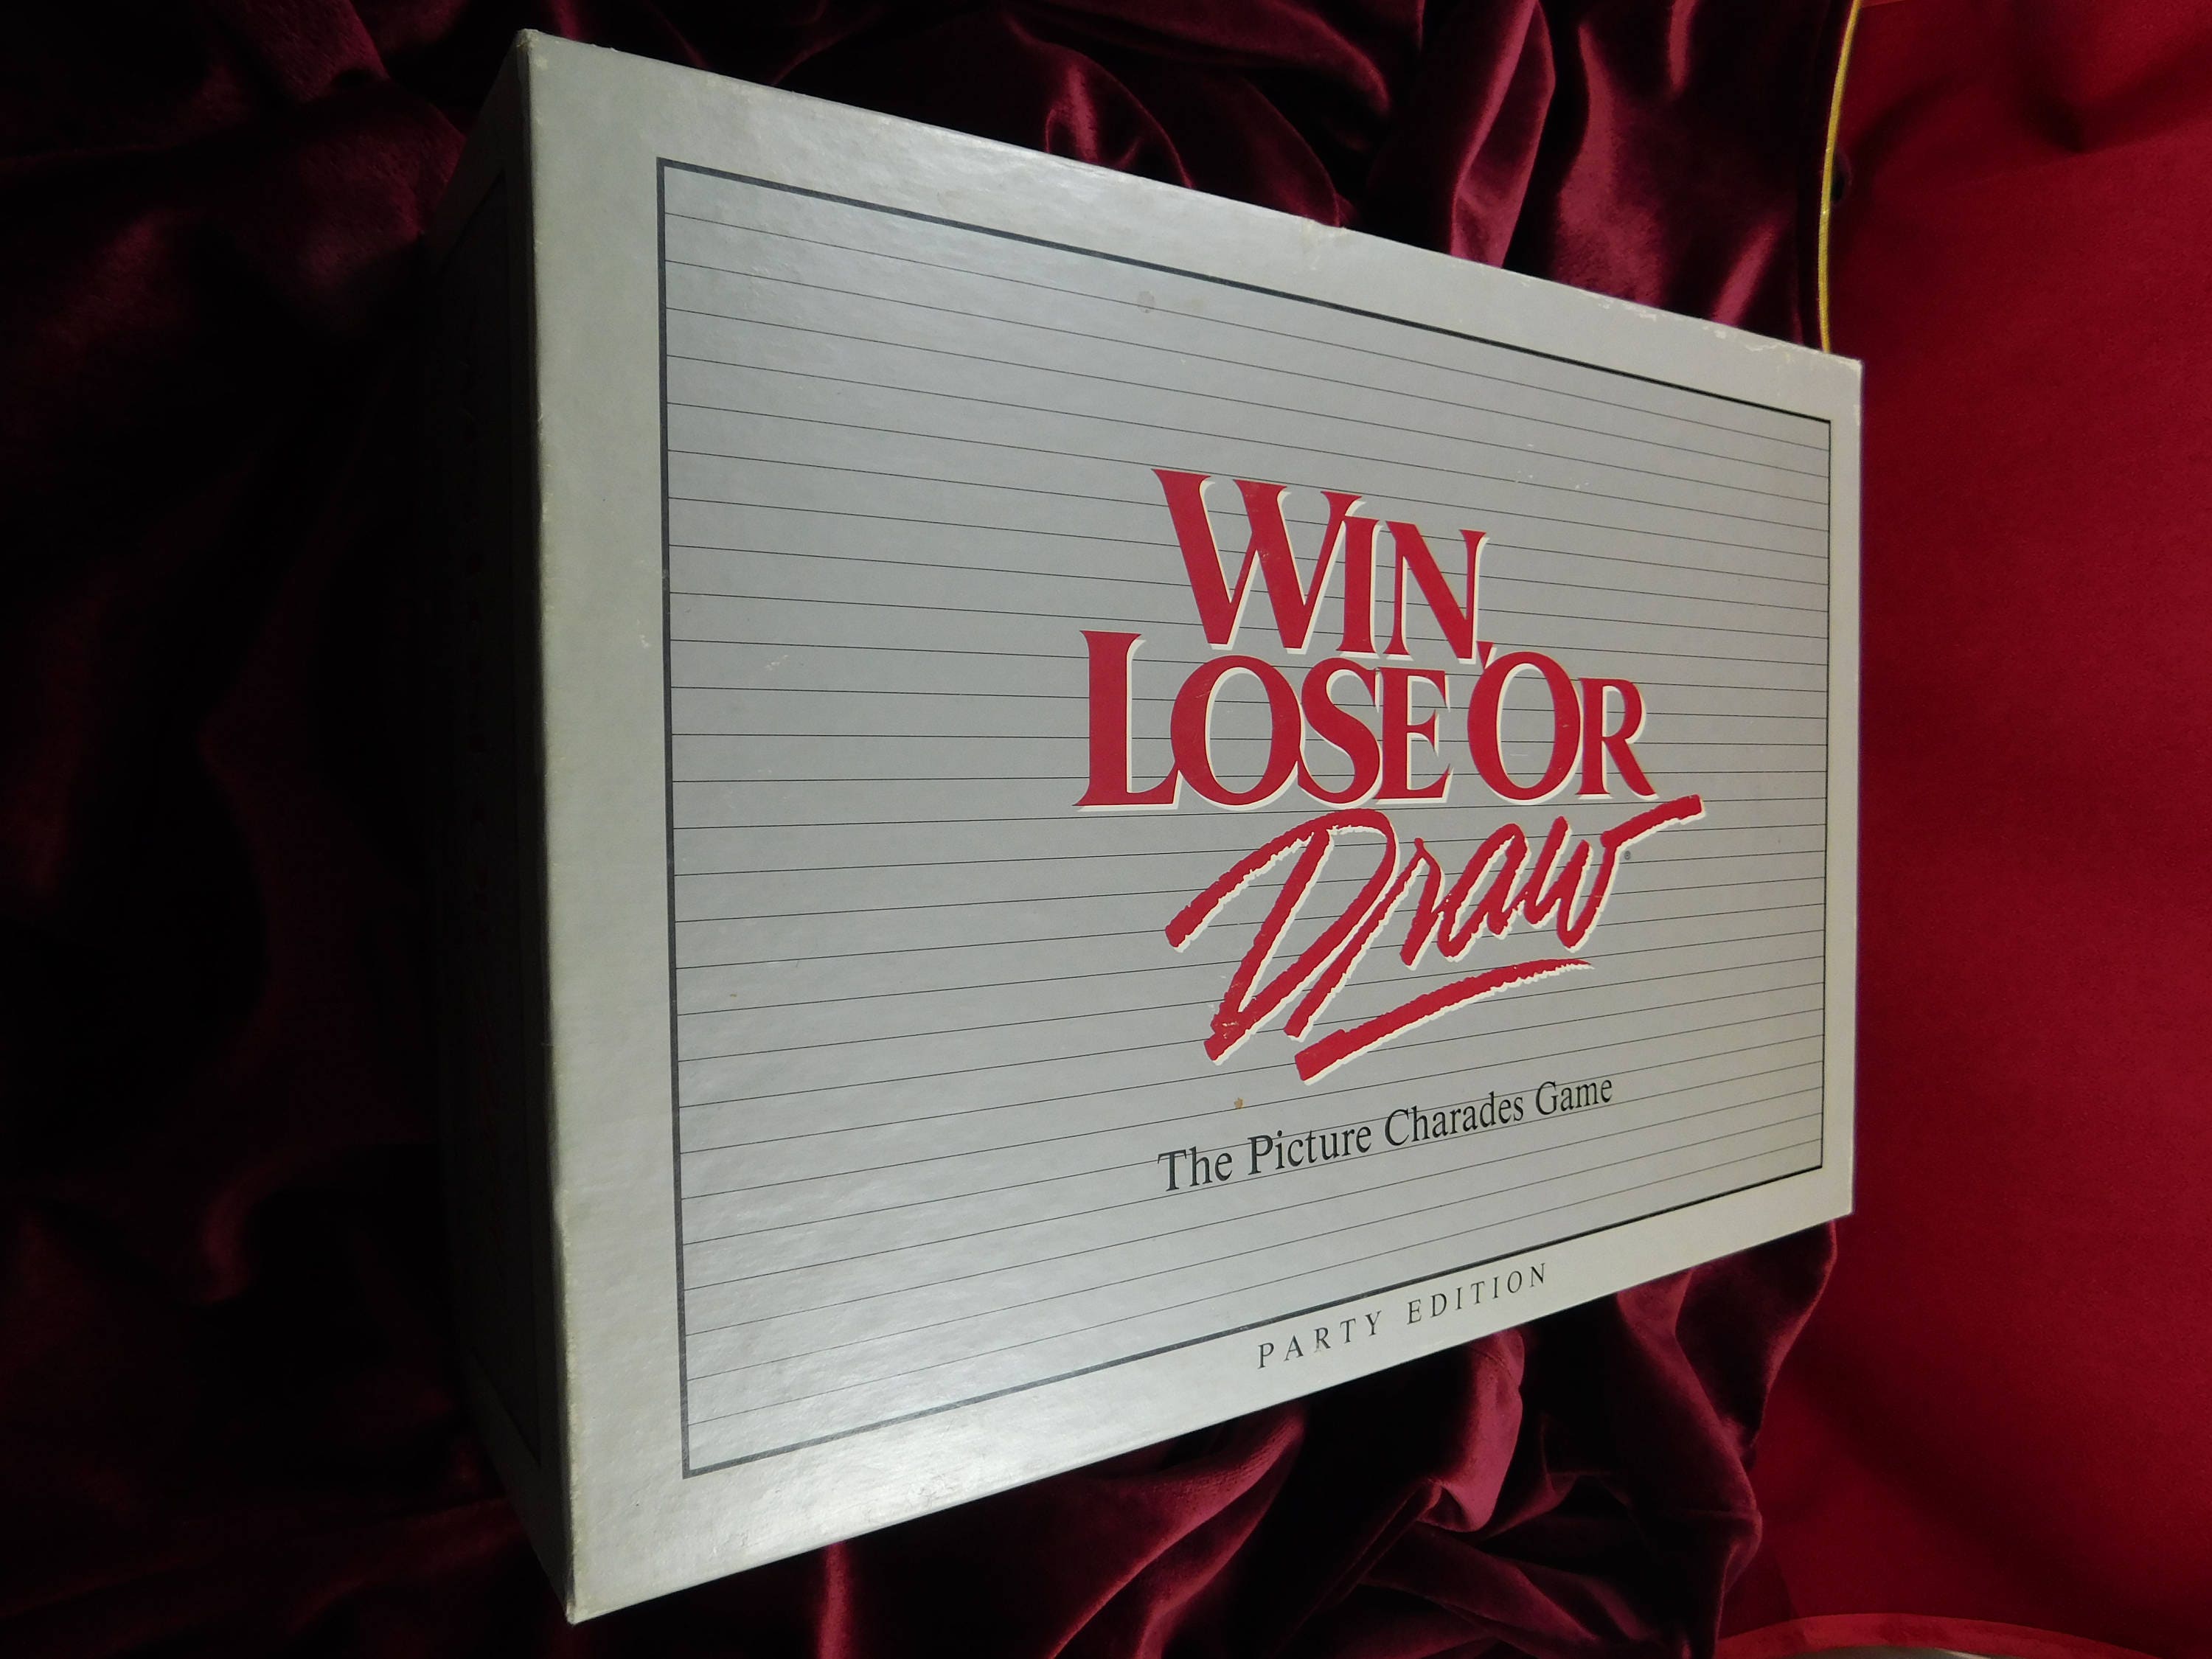  Win, Lose or Draw: CDs & Vinyl